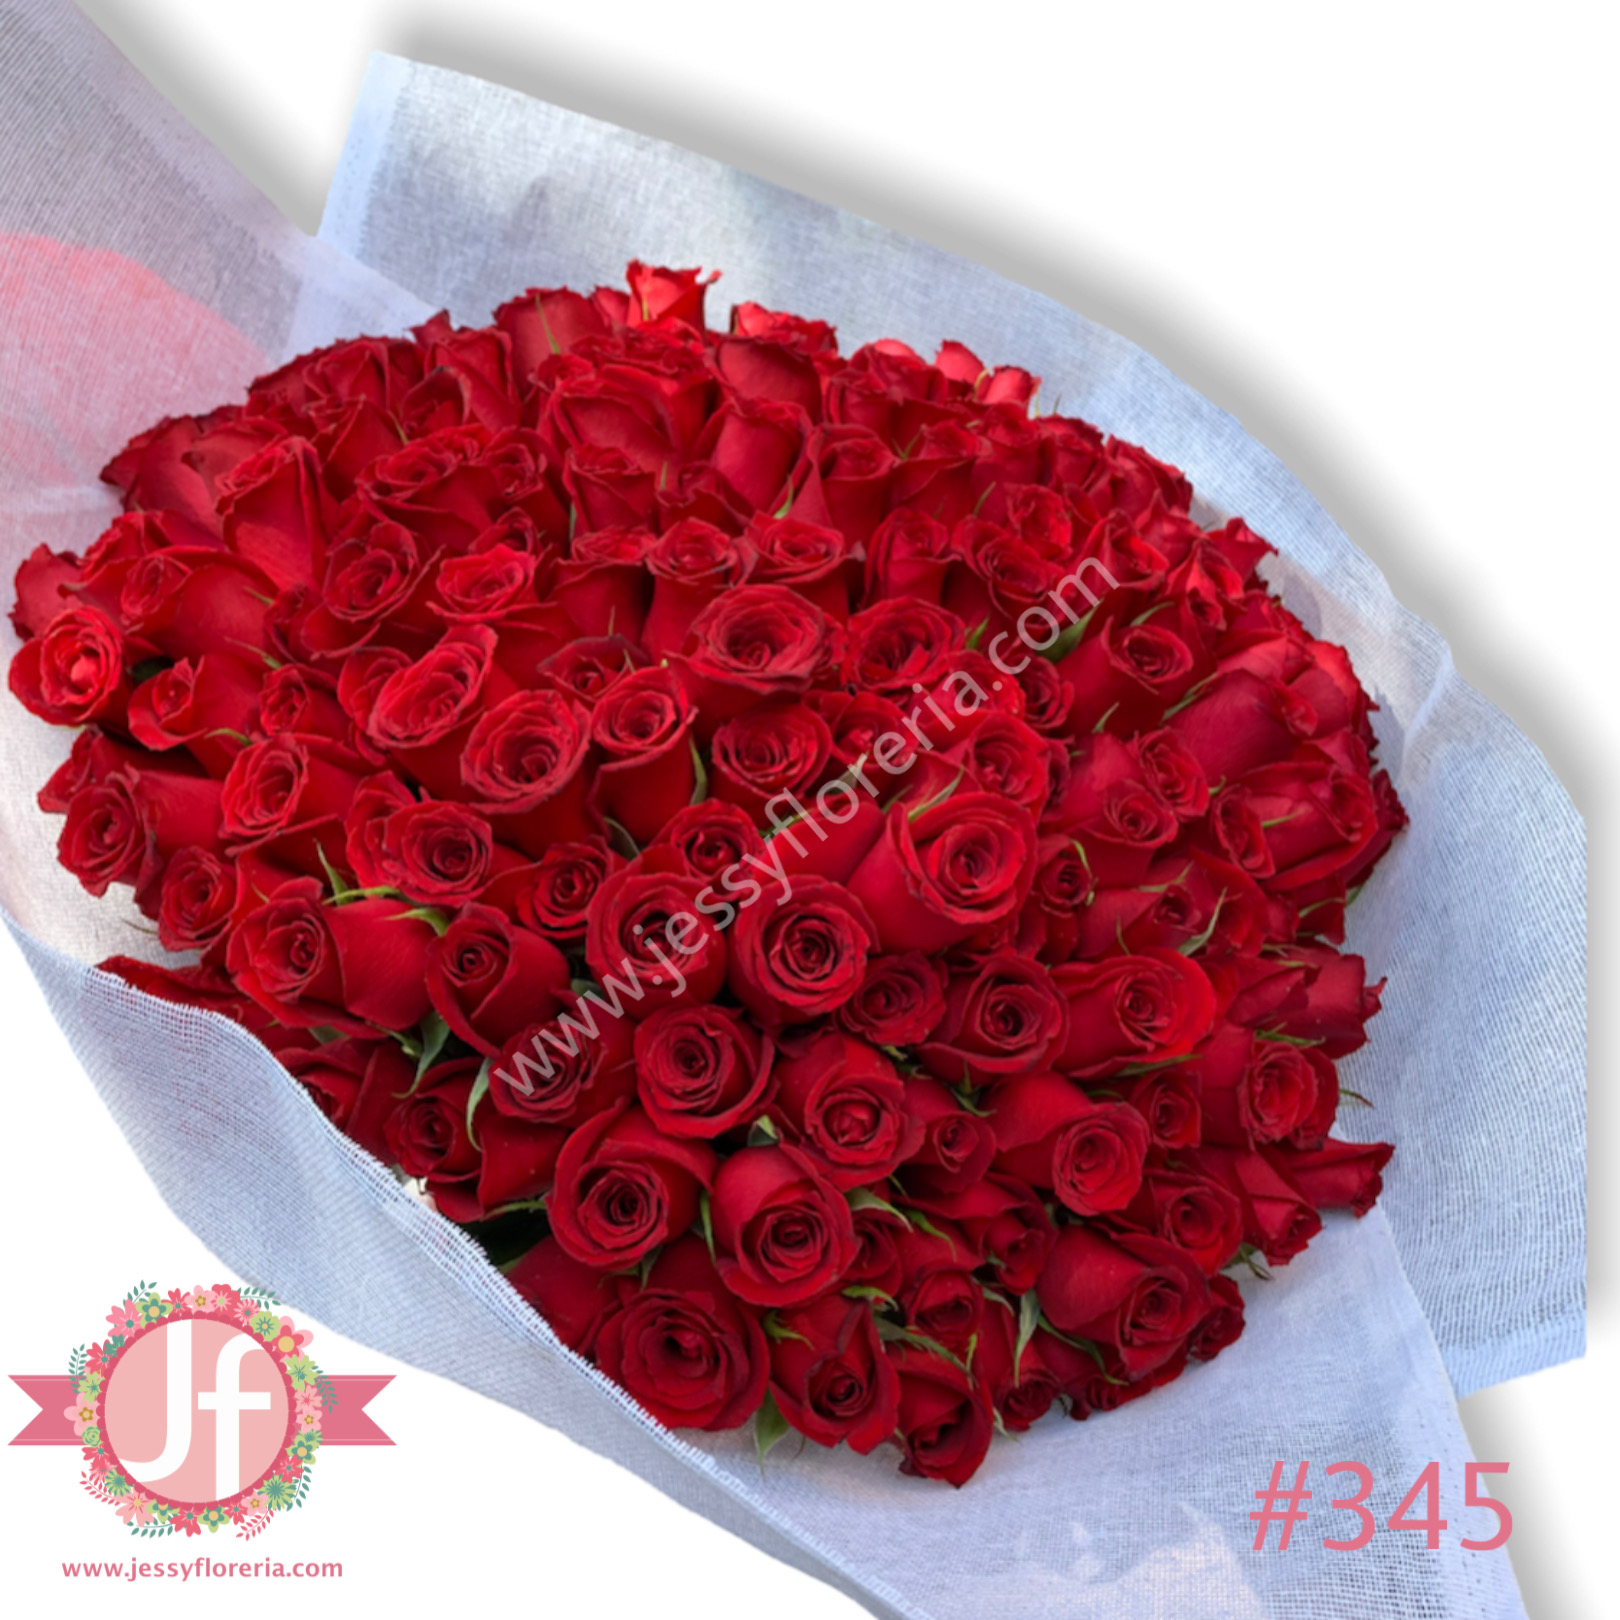 Ramo de 150 rosas rojas - Envío GRATIS mismo día 2-4 Hrs